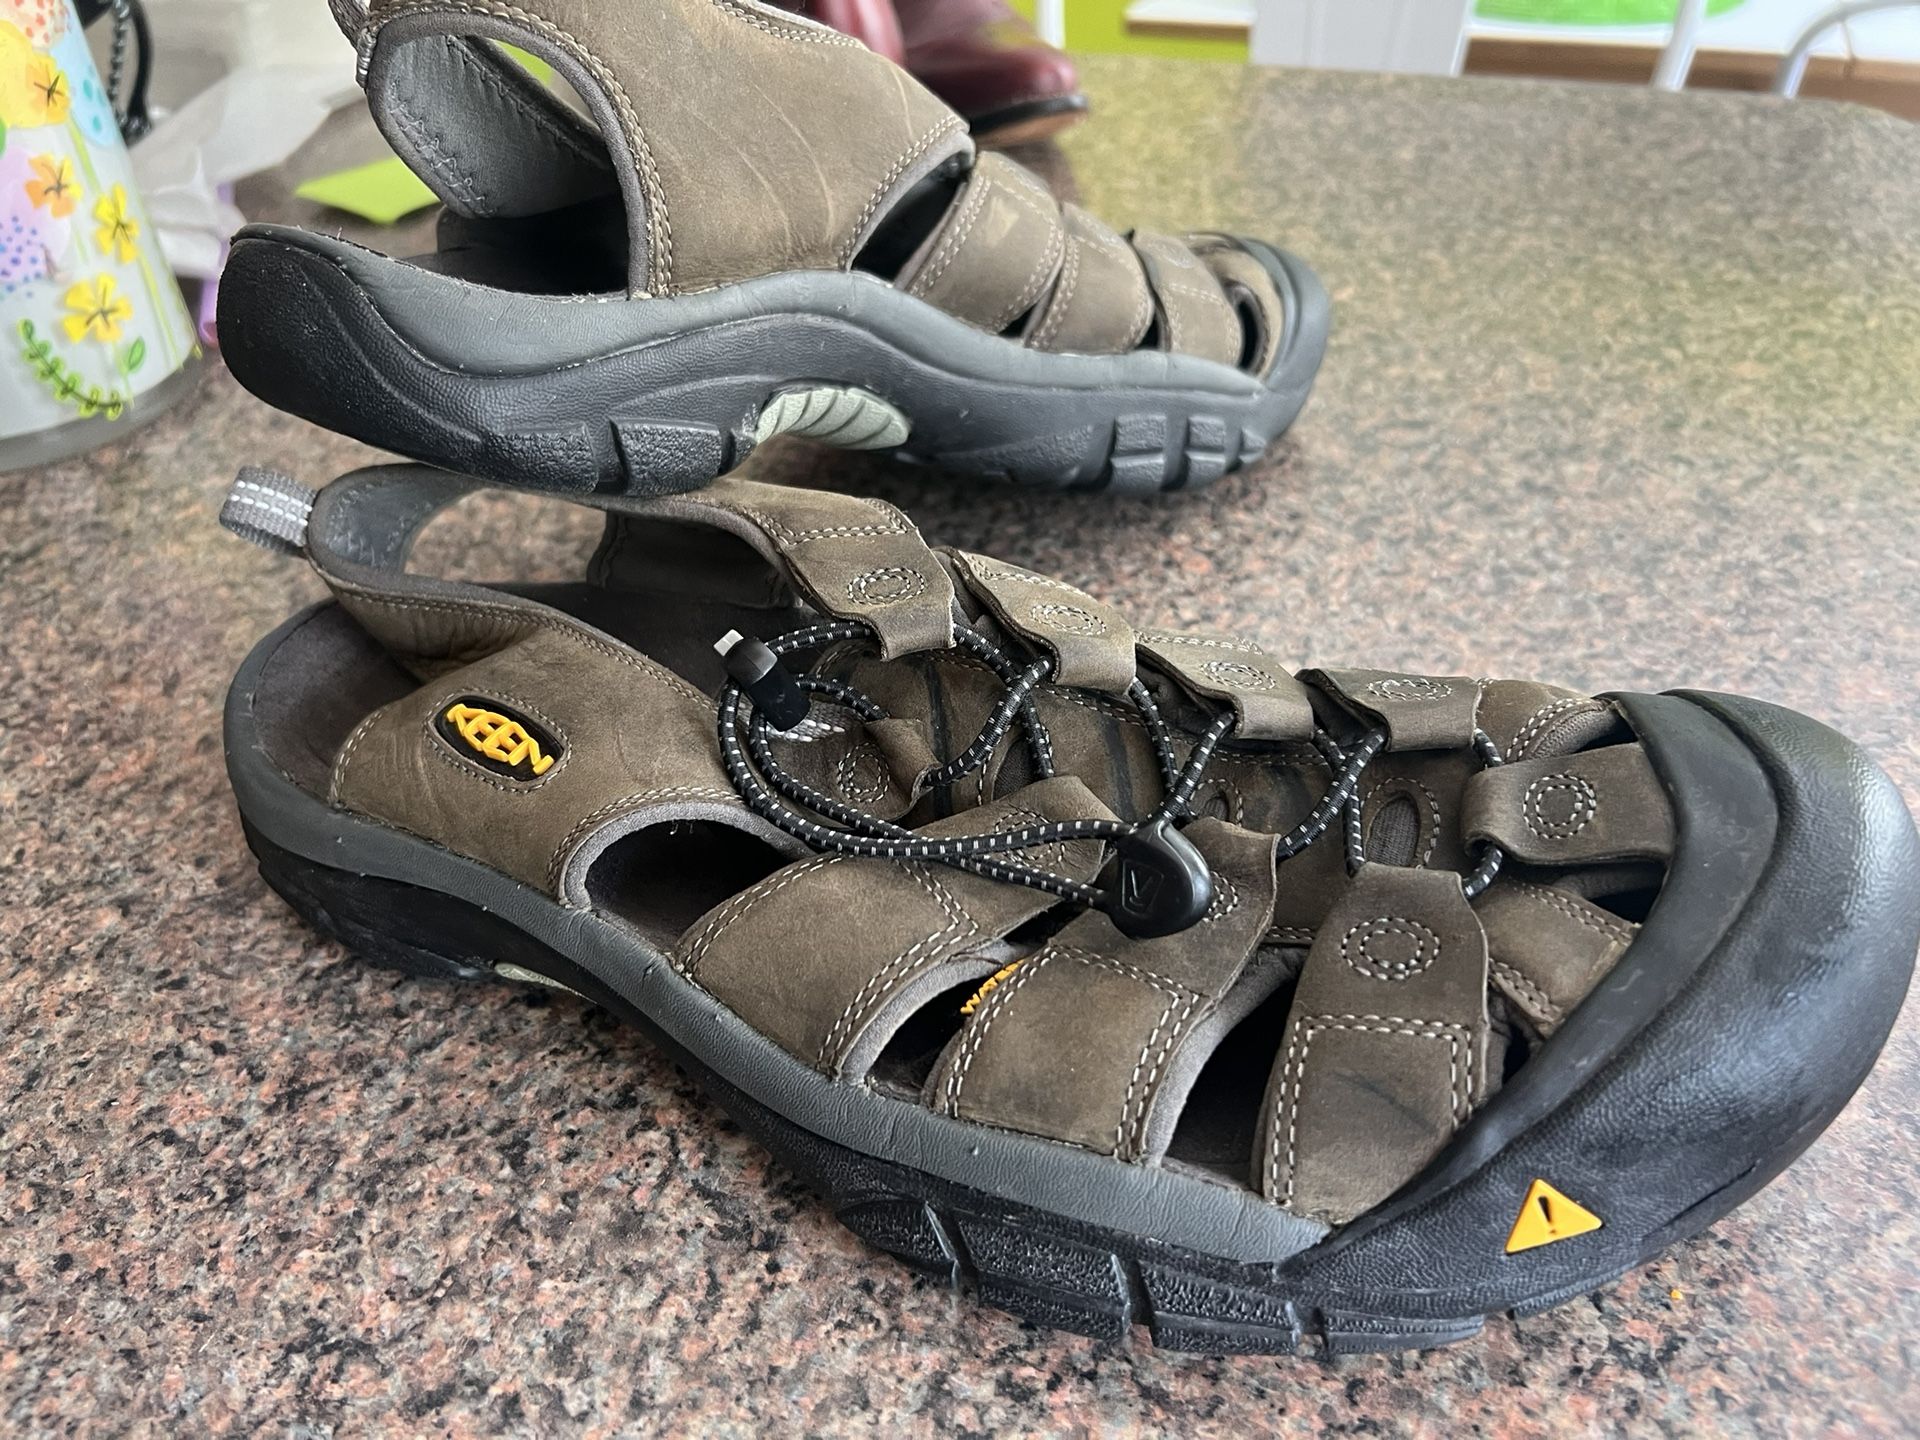 KEEN, Best Sandals, Ever, S – 13, Gr888 Condition, $49